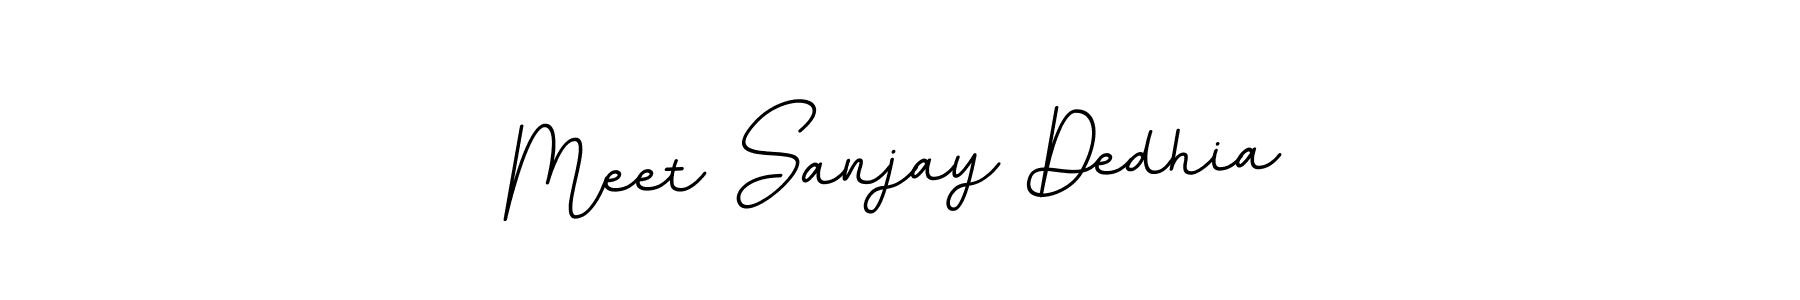 How to Draw Meet Sanjay Dedhia signature style? BallpointsItalic-DORy9 is a latest design signature styles for name Meet Sanjay Dedhia. Meet Sanjay Dedhia signature style 11 images and pictures png